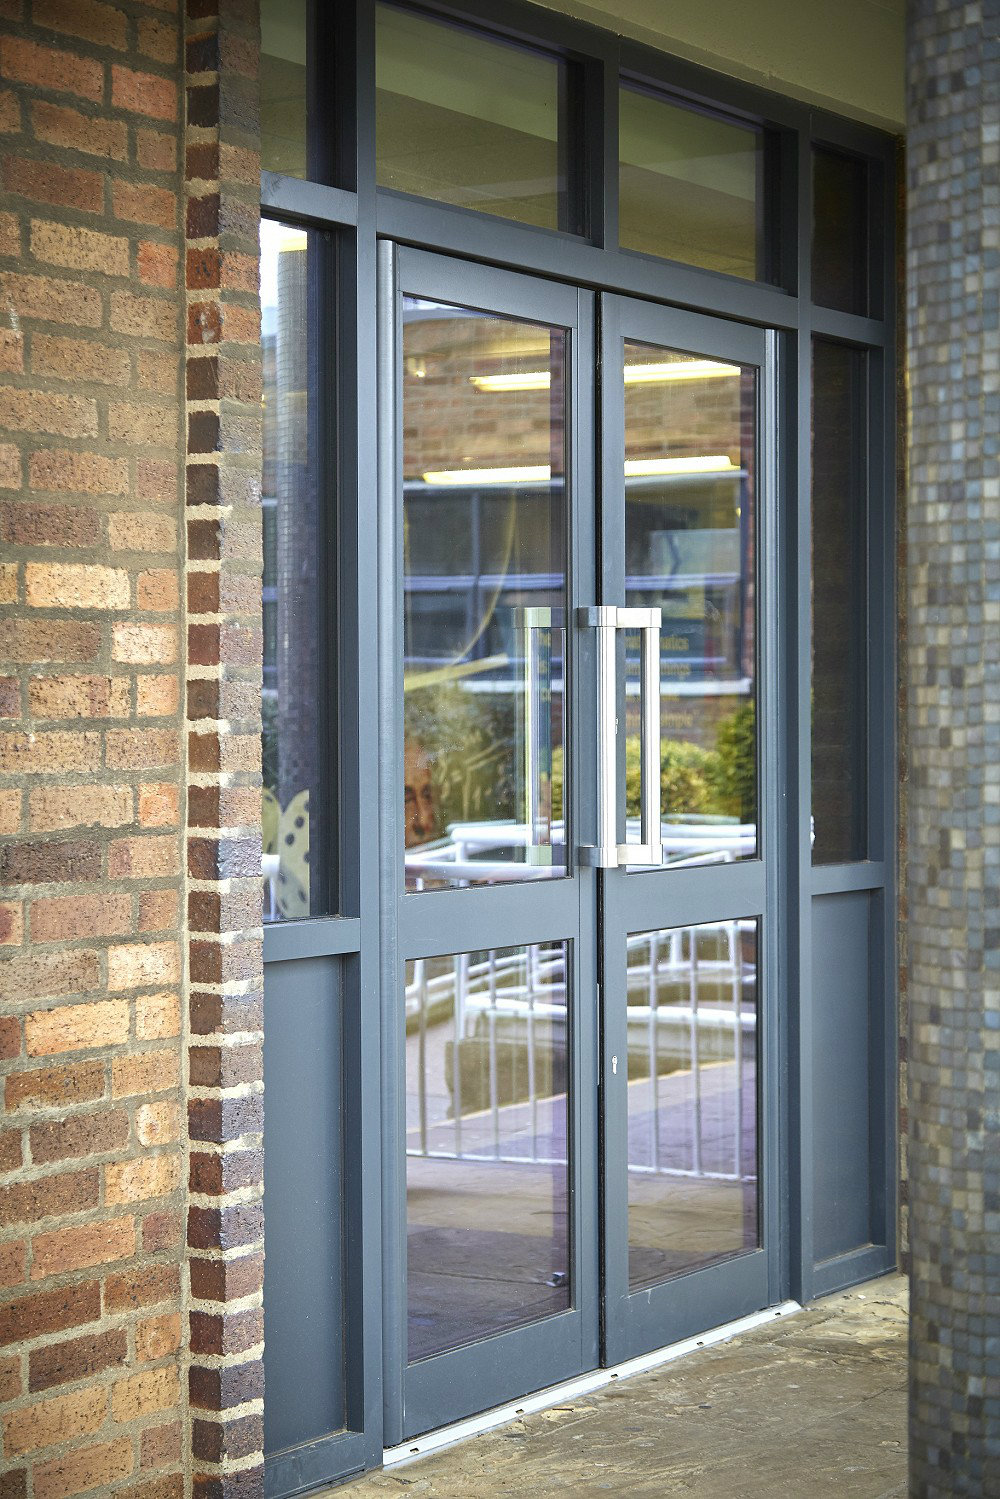 Aluminium entrance doors on a school building